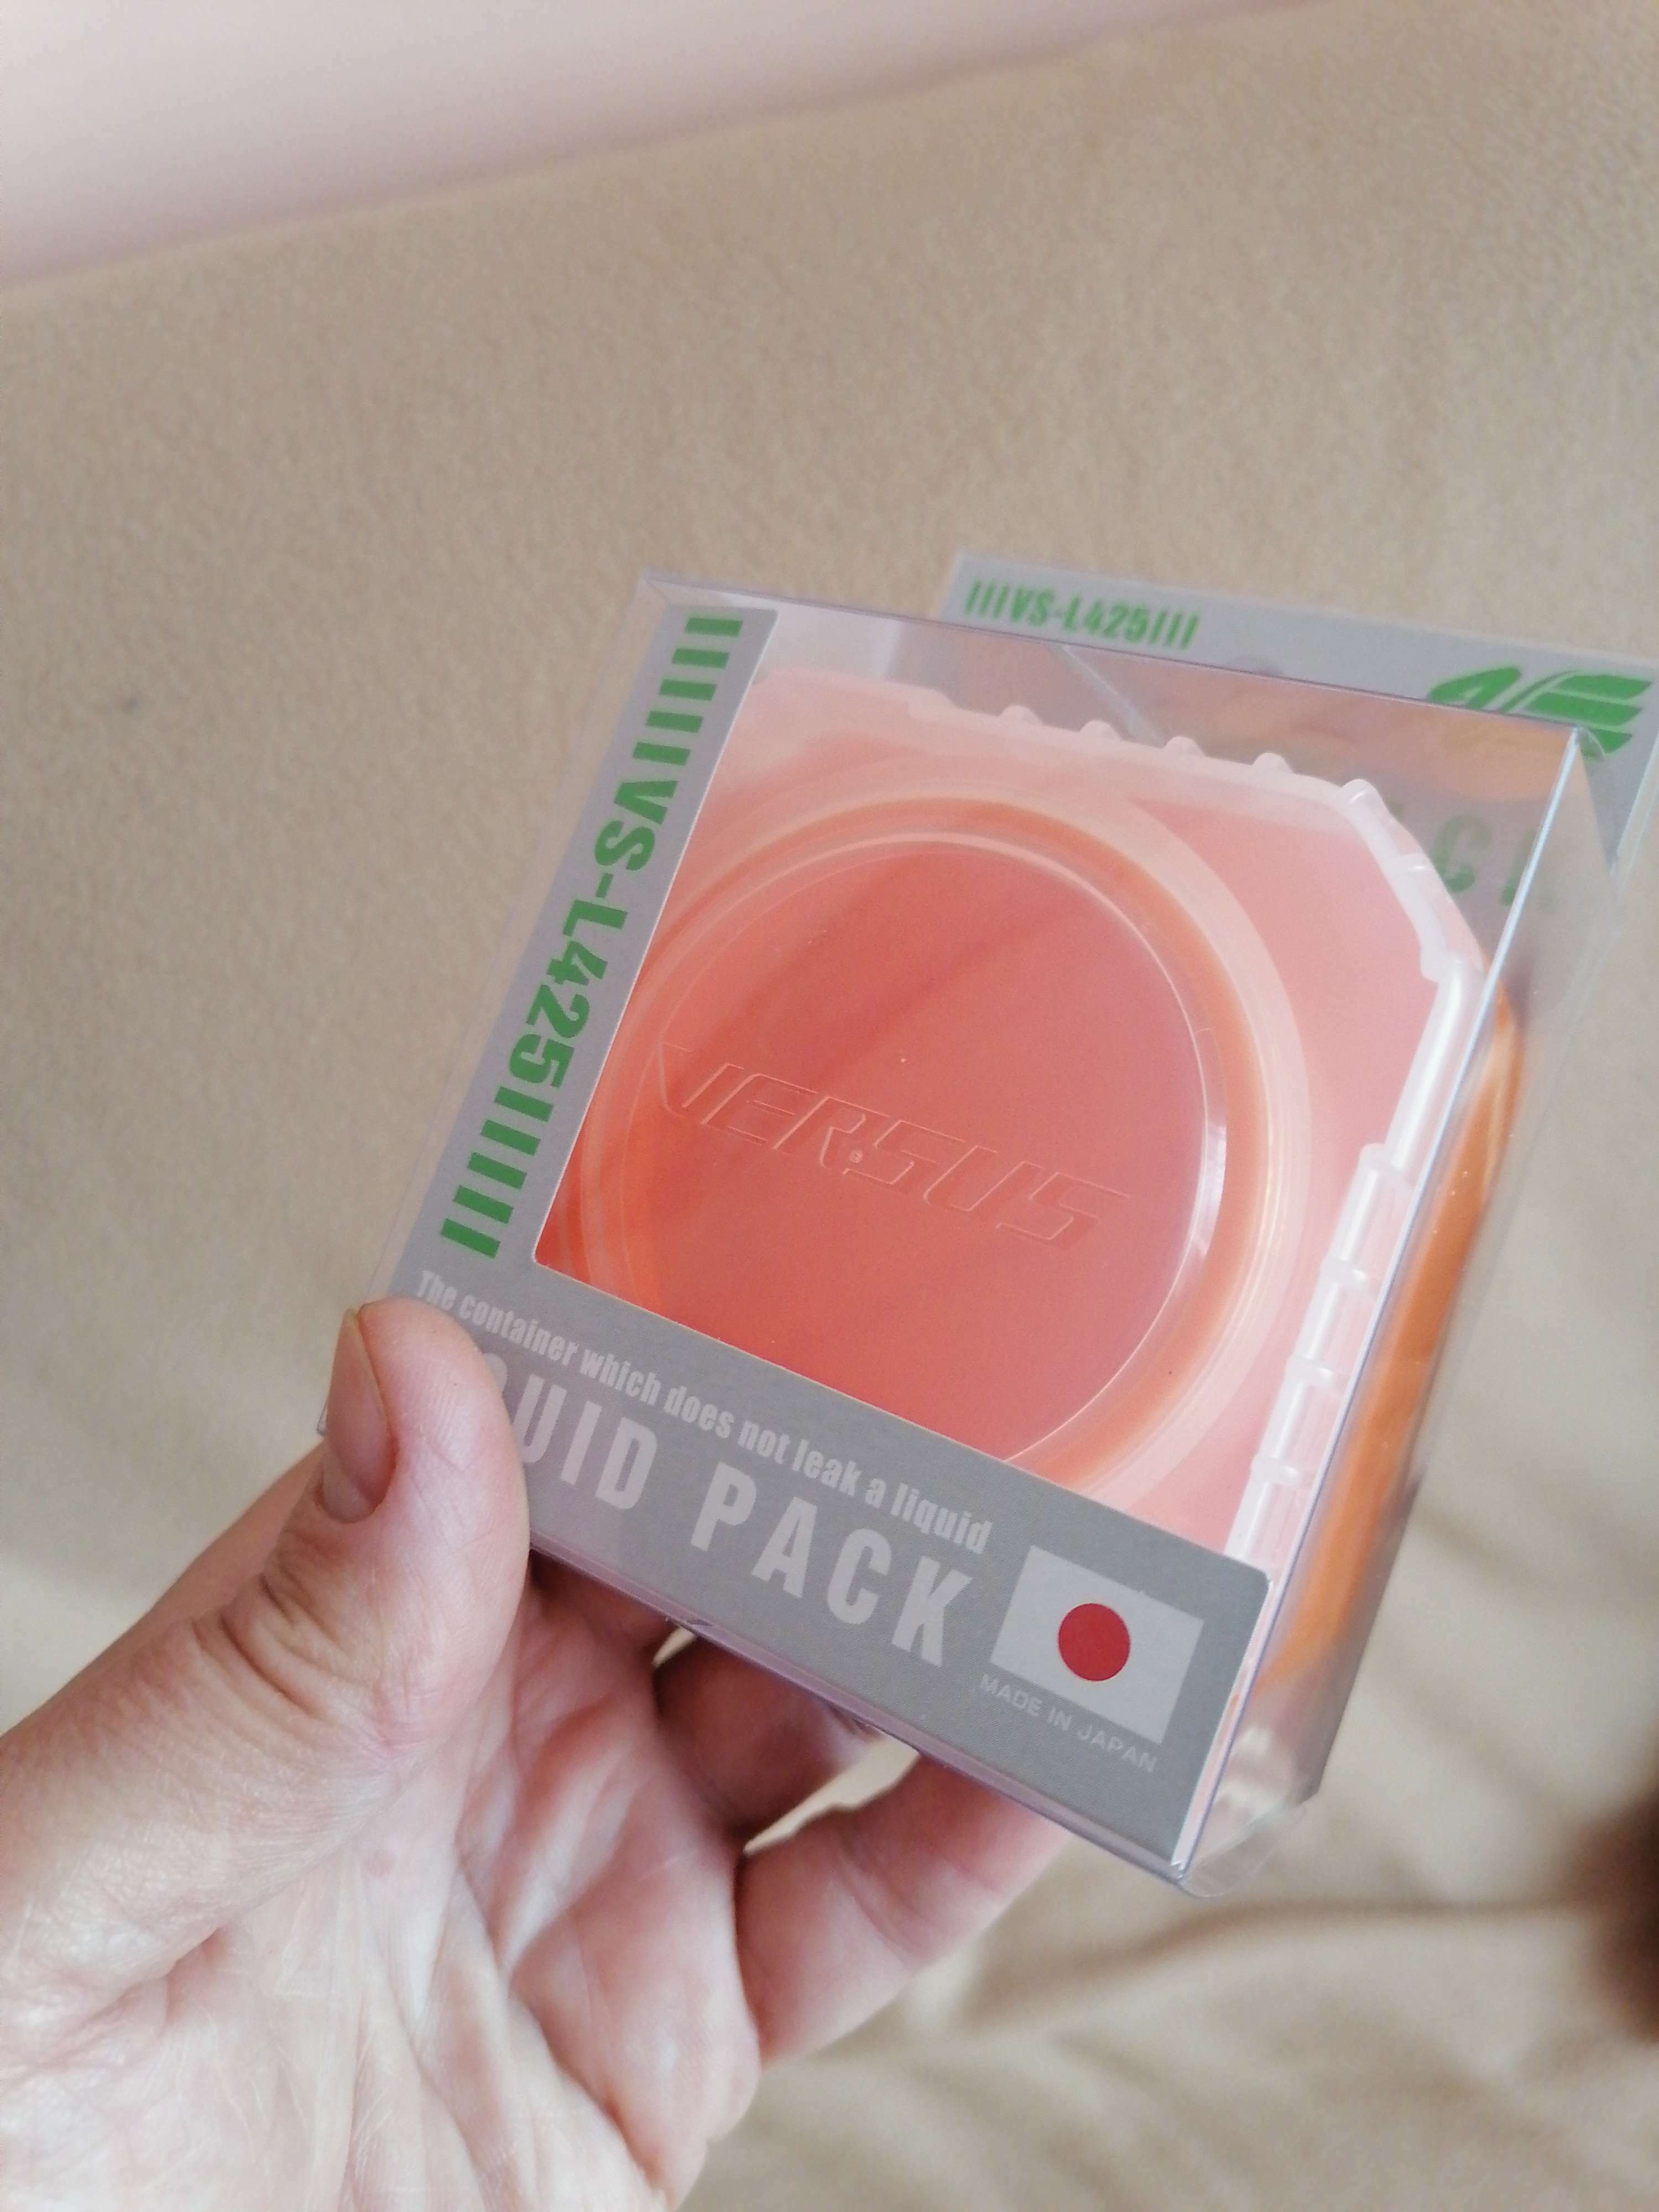 Meiho Liquid Pack VS-L425 Orange